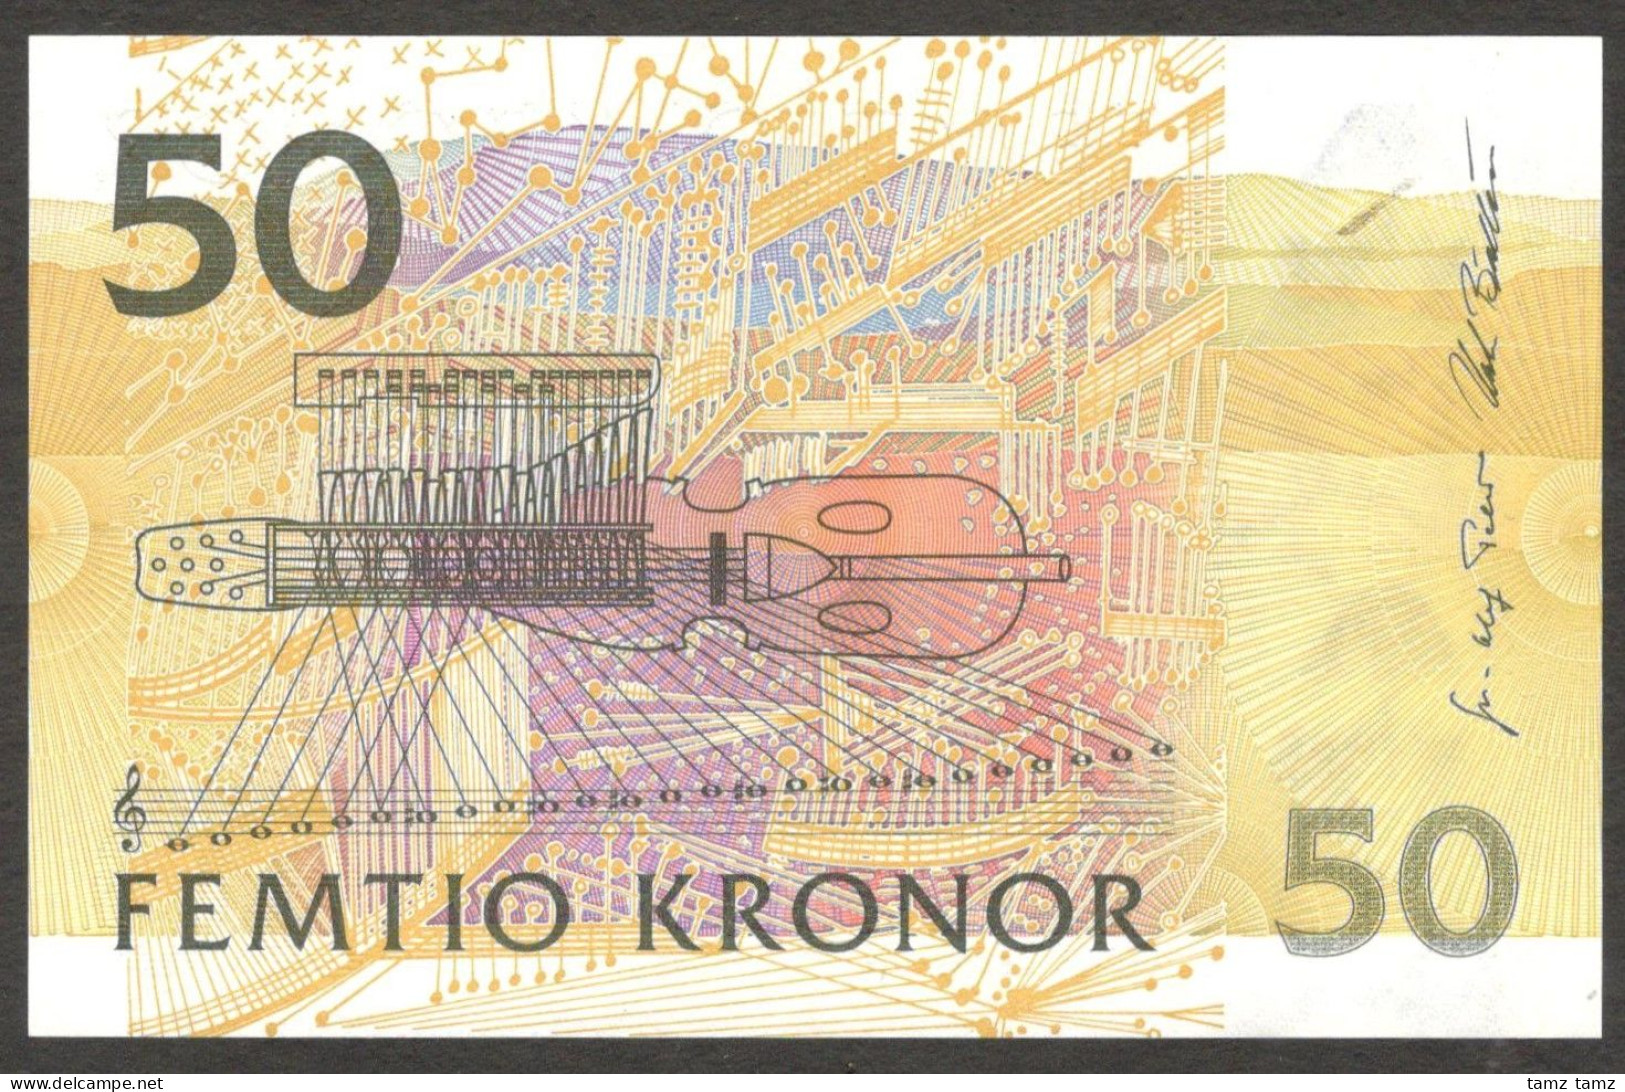 Sweden 50 Kronor Jenny Lind 1996 UNC Beautiful Banknotes - Sweden